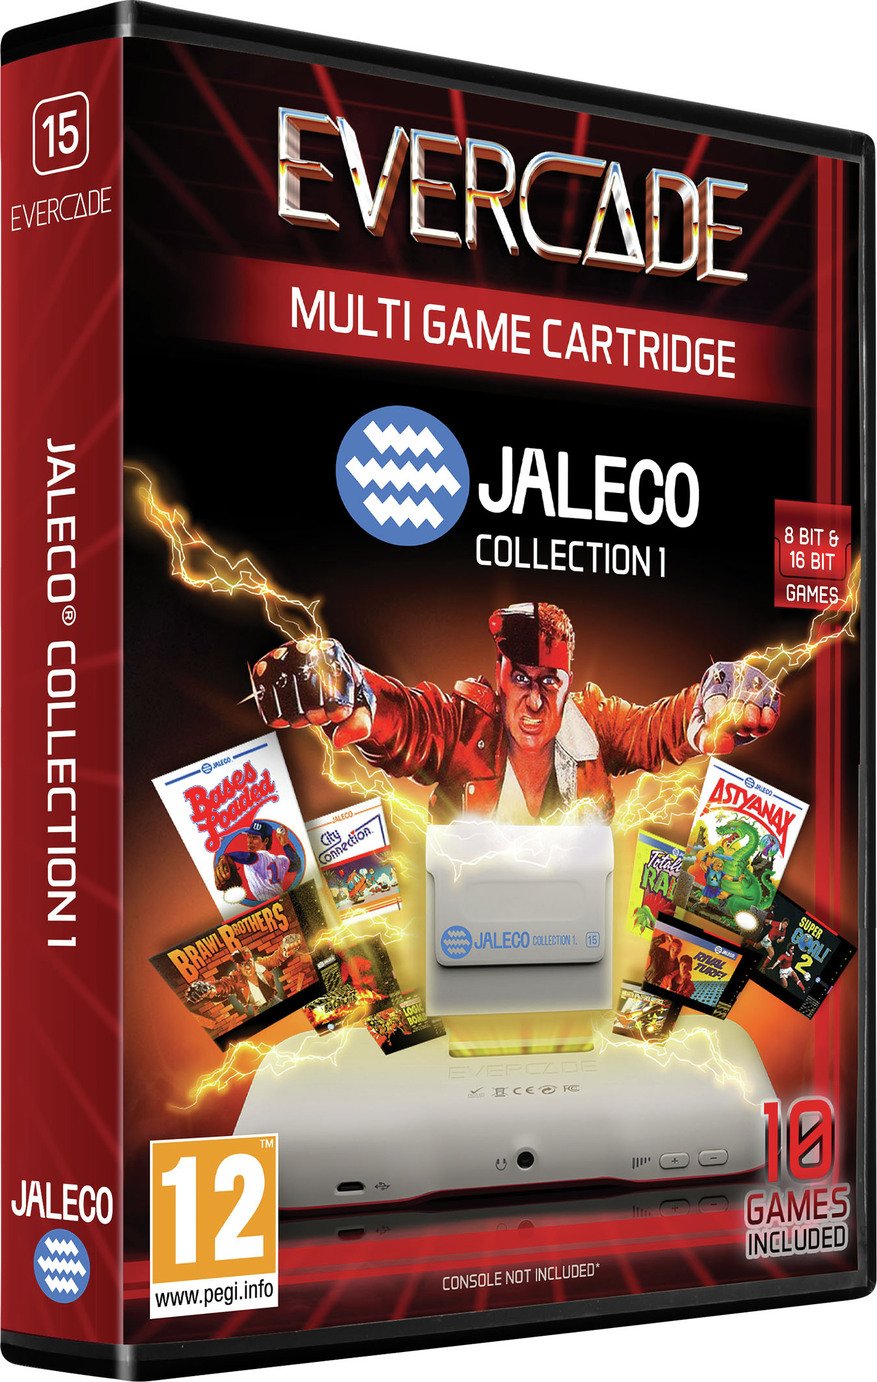 Evercade Cartridge Jaleco Collection 1